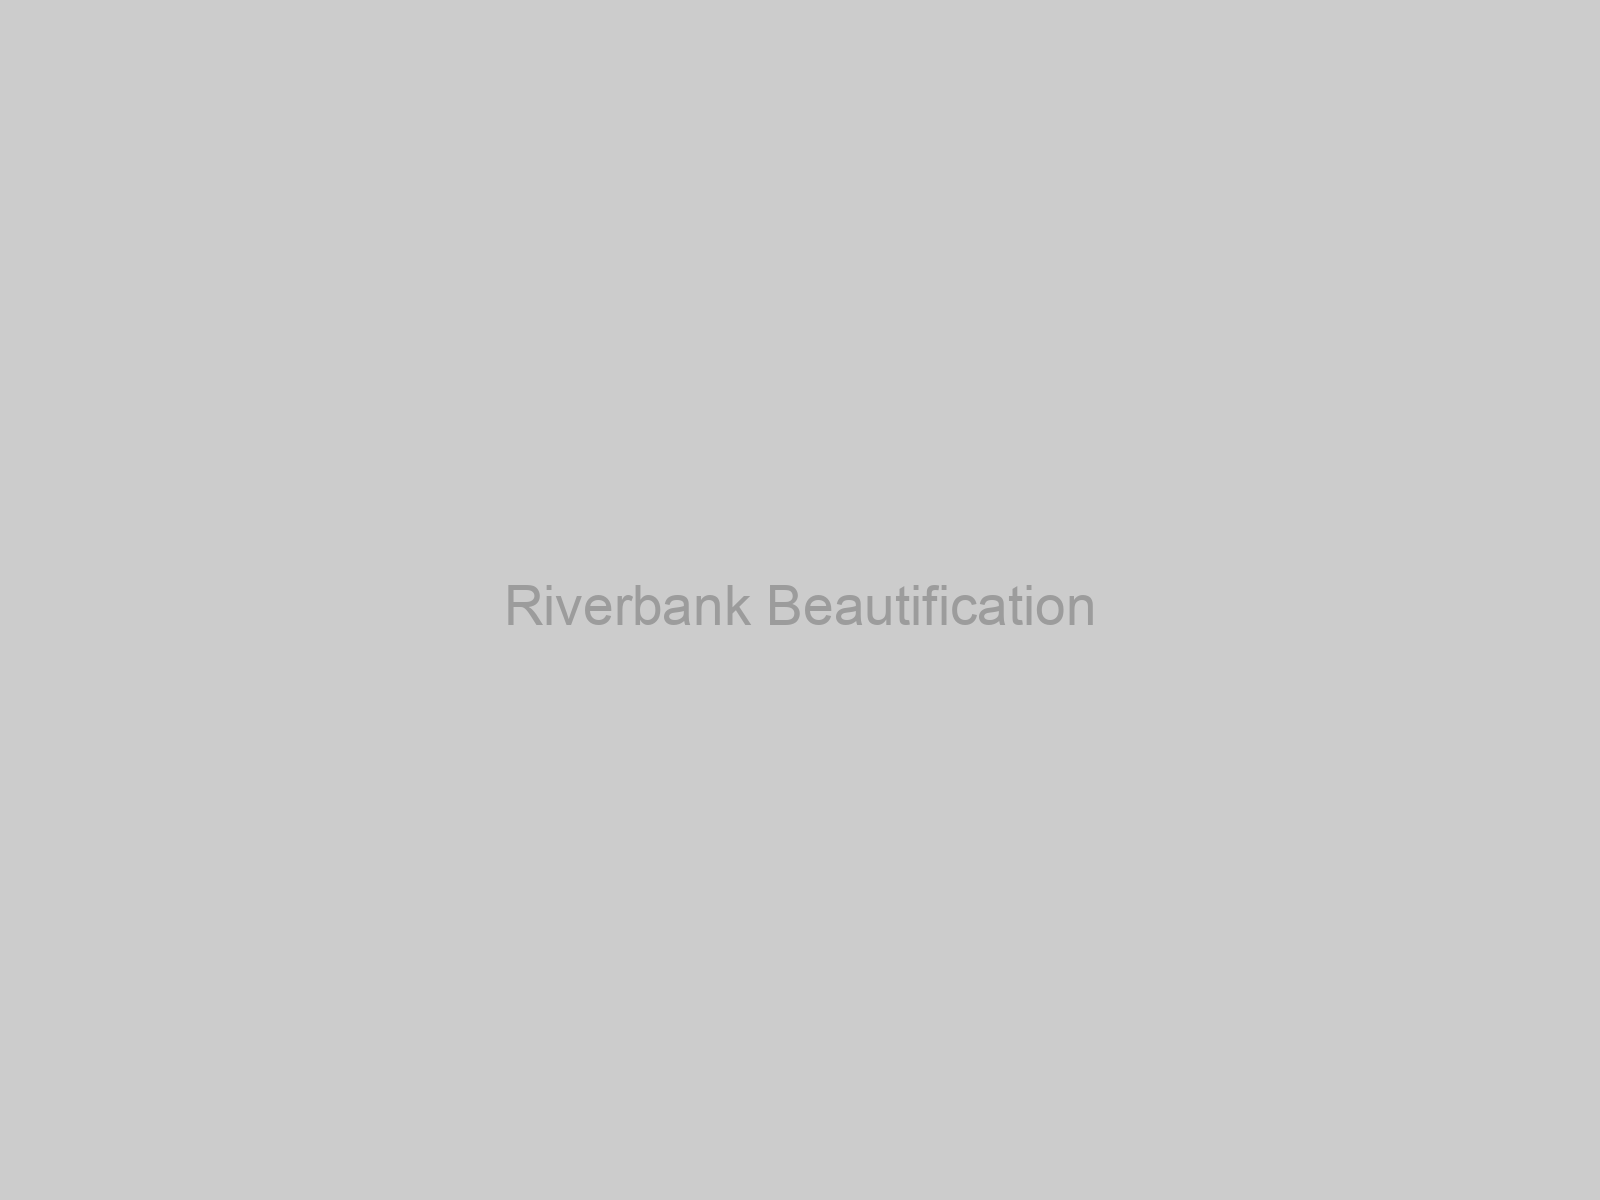 Riverbank Beautification